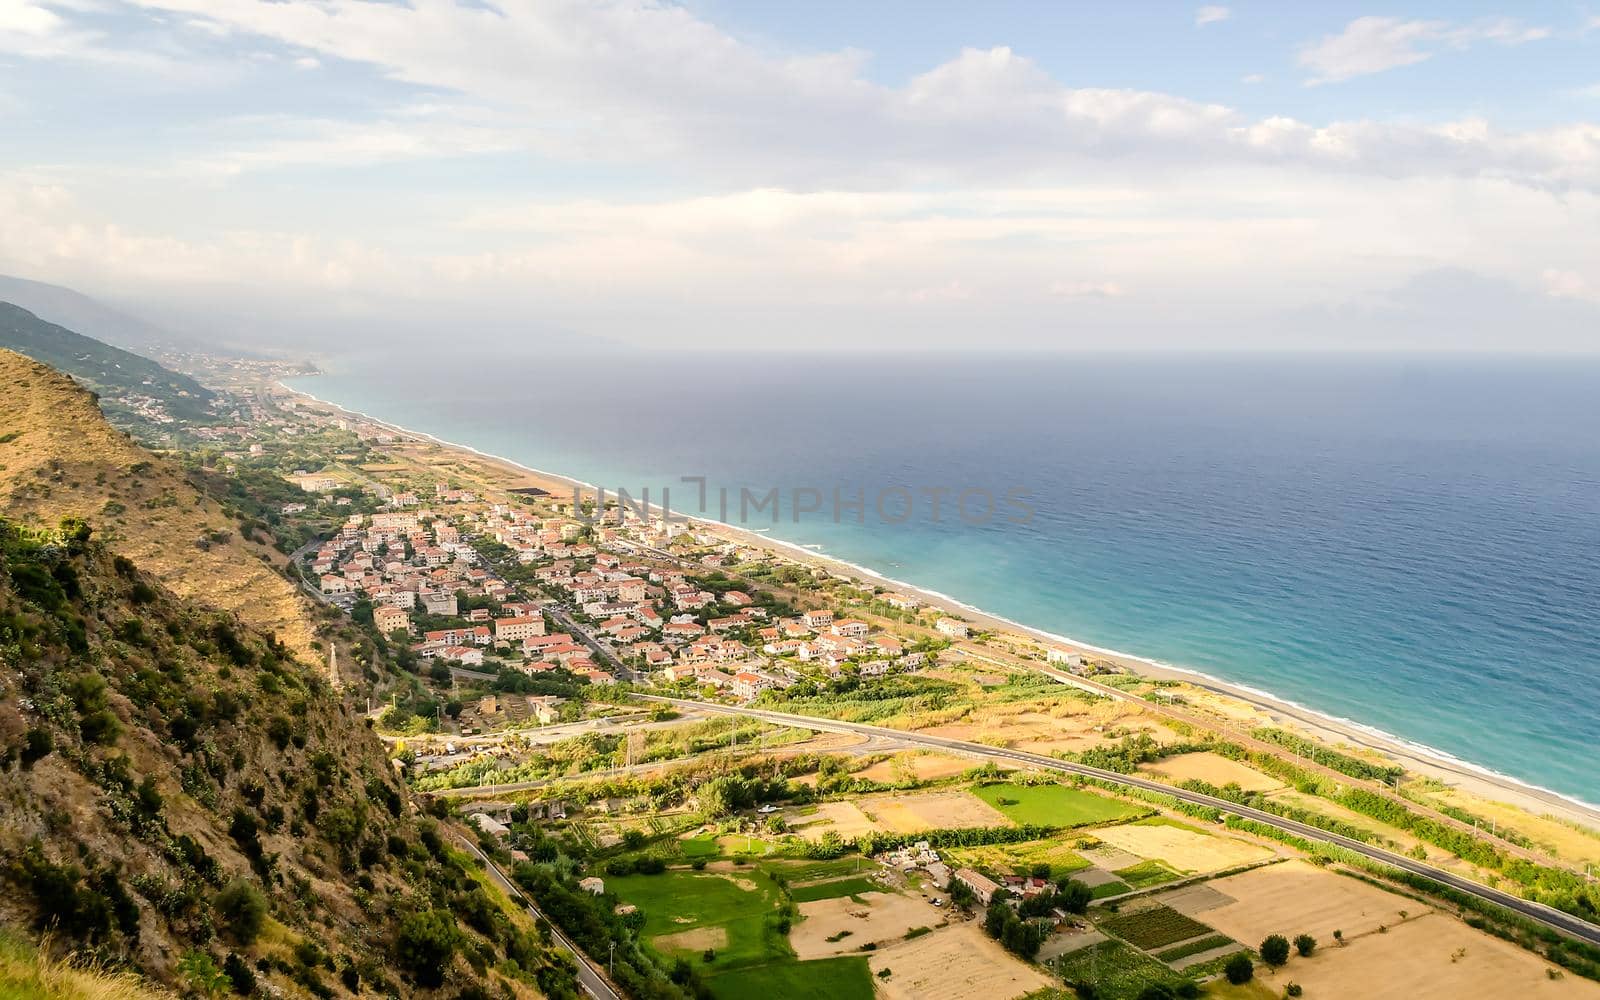 Aerial view over the coastline in Calabria, Italy by marcorubino